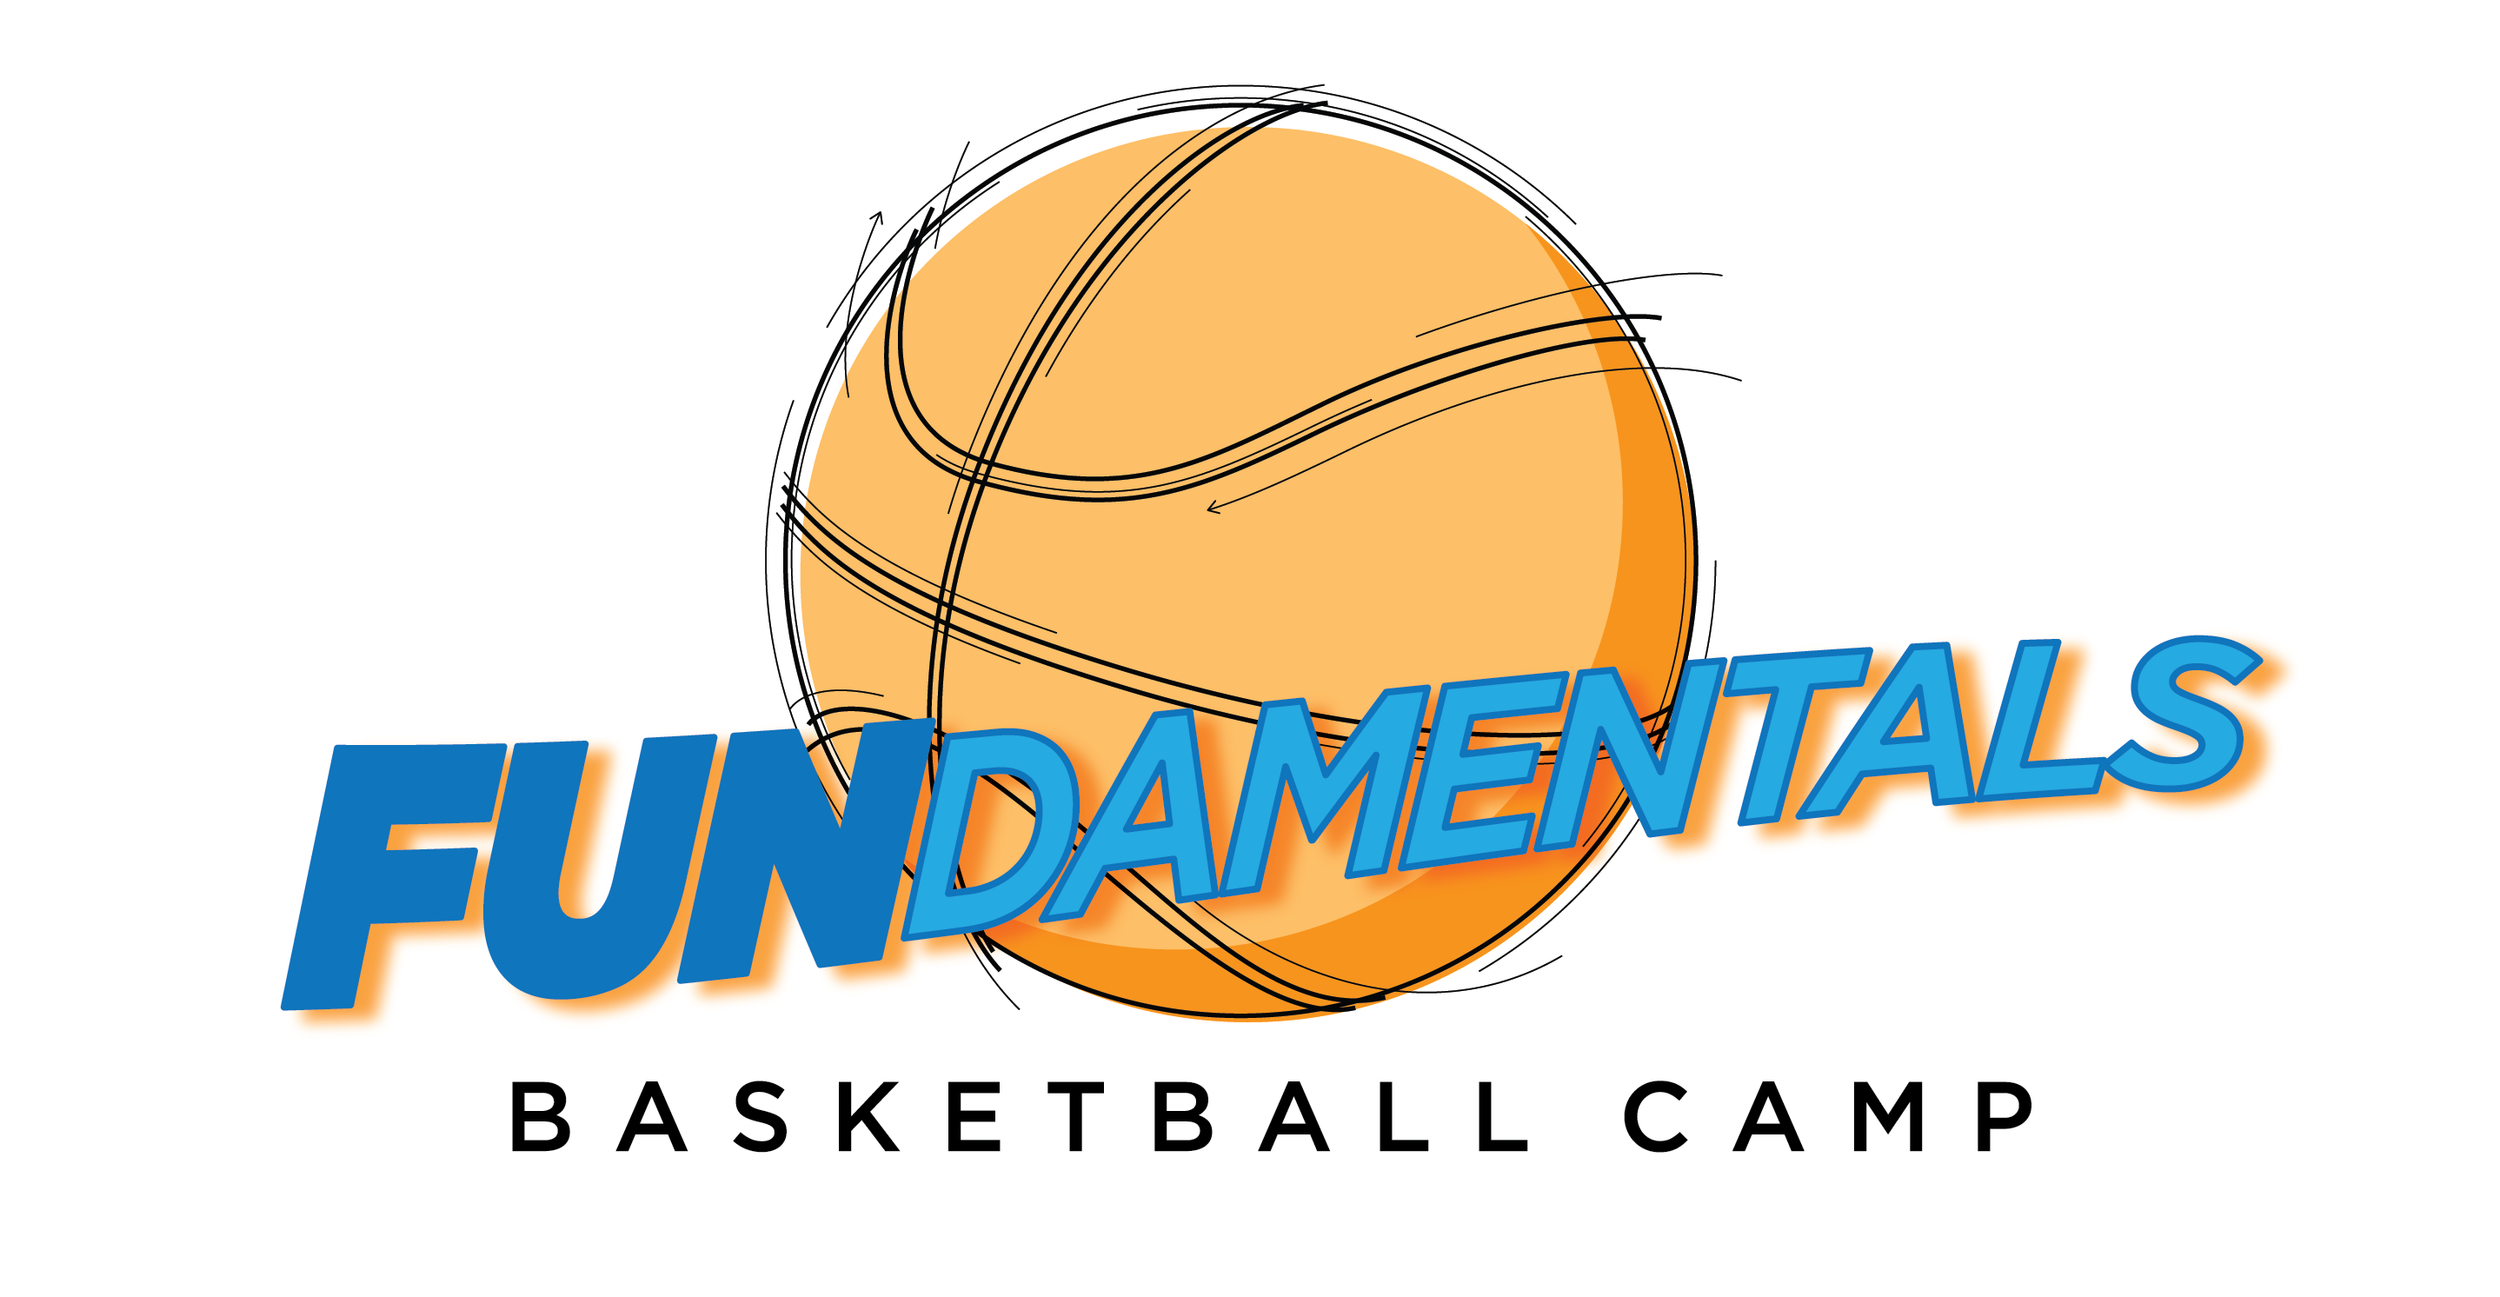 FUNdamentals Basketball Camp